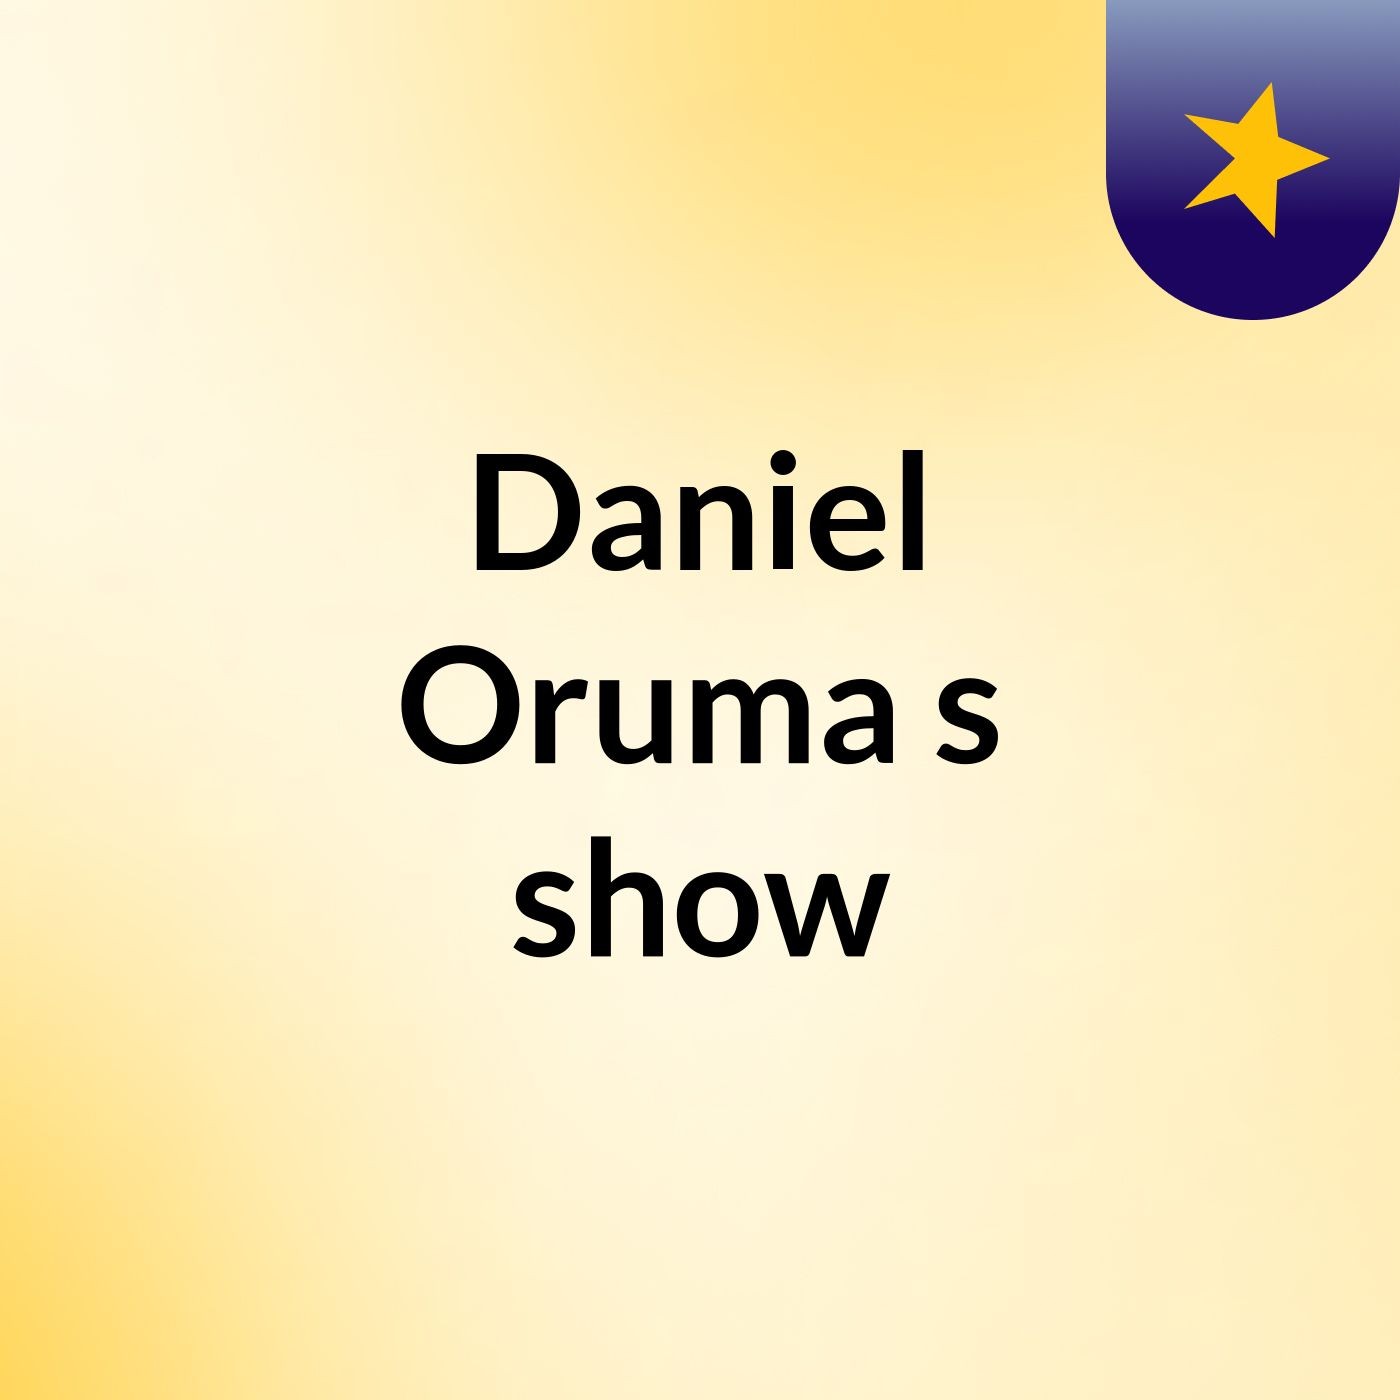 Daniel Oruma's show